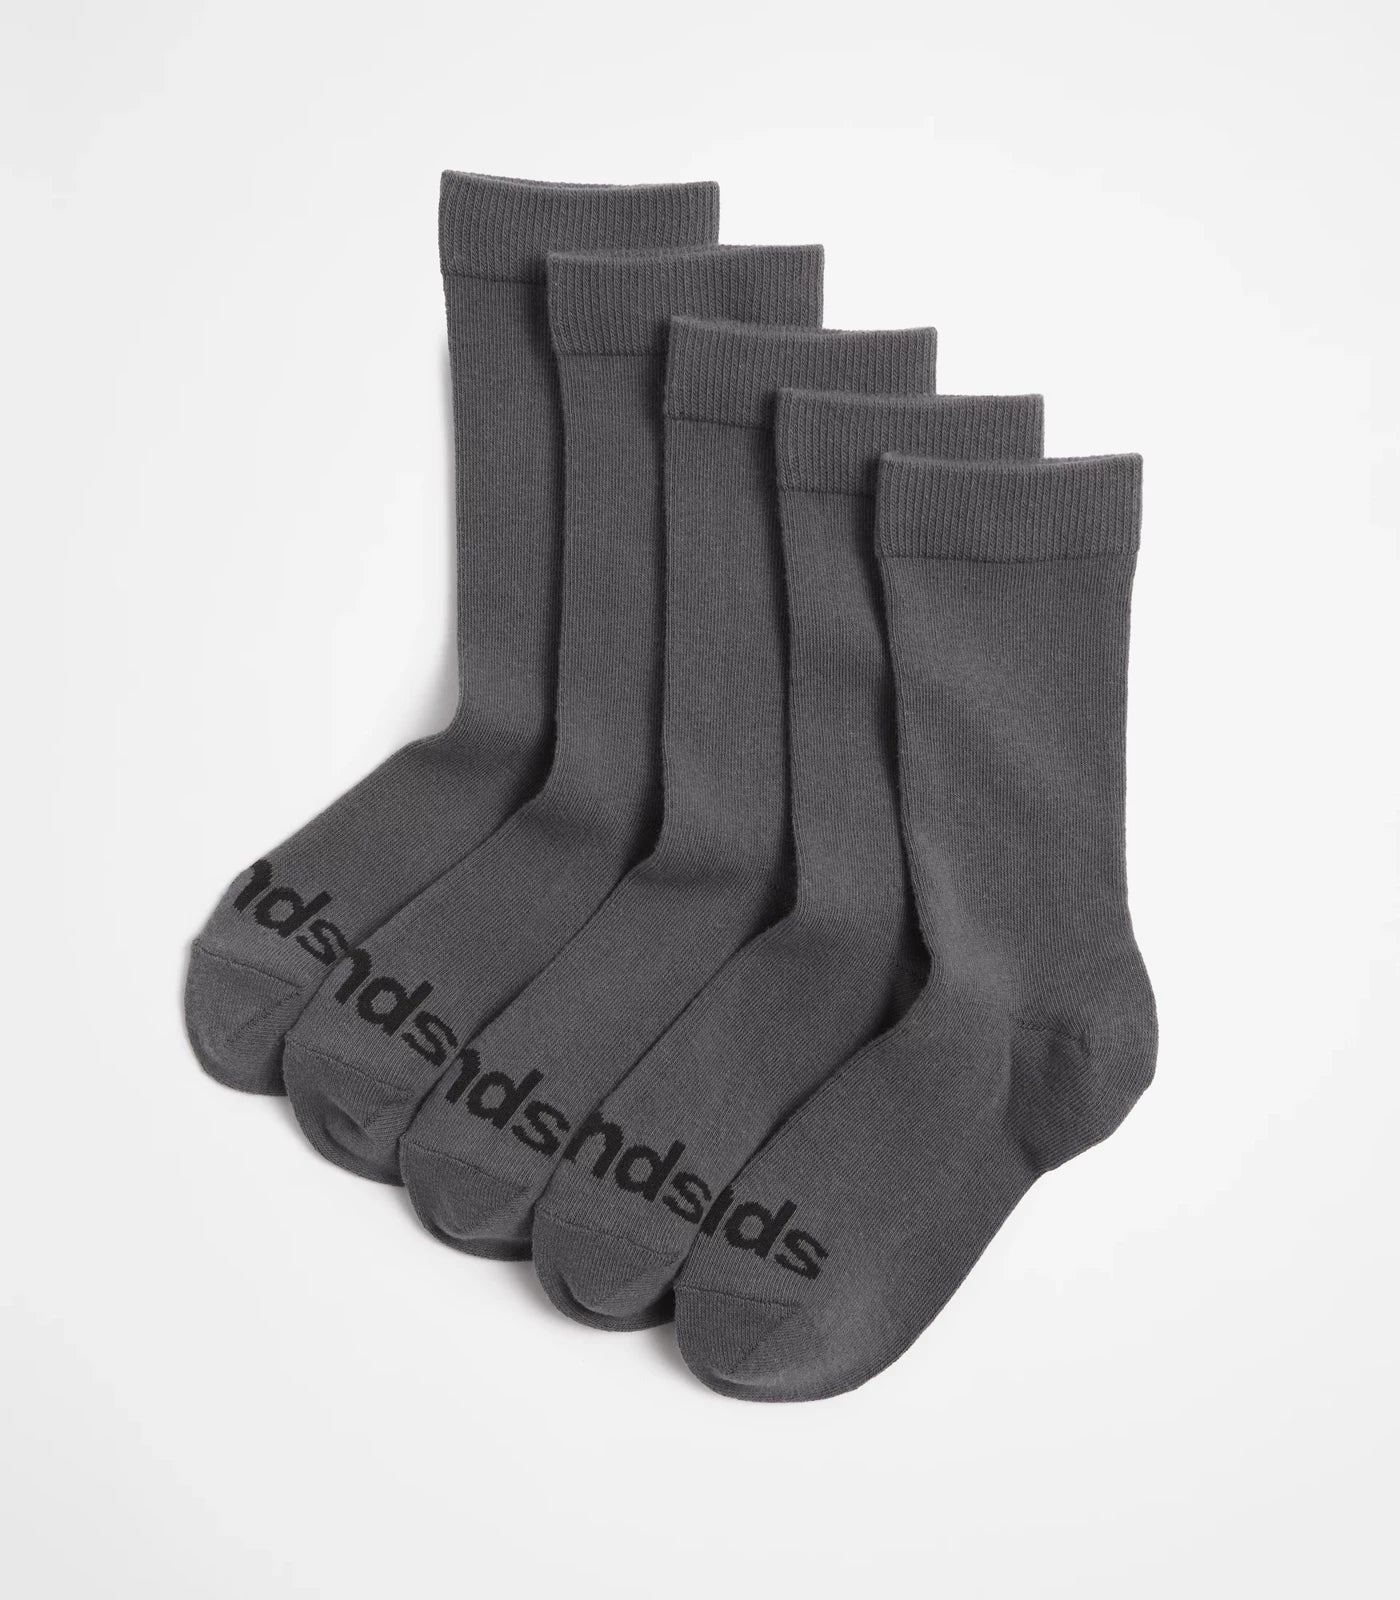 Bonds Kids Crew Socks 5 Pack - Grey